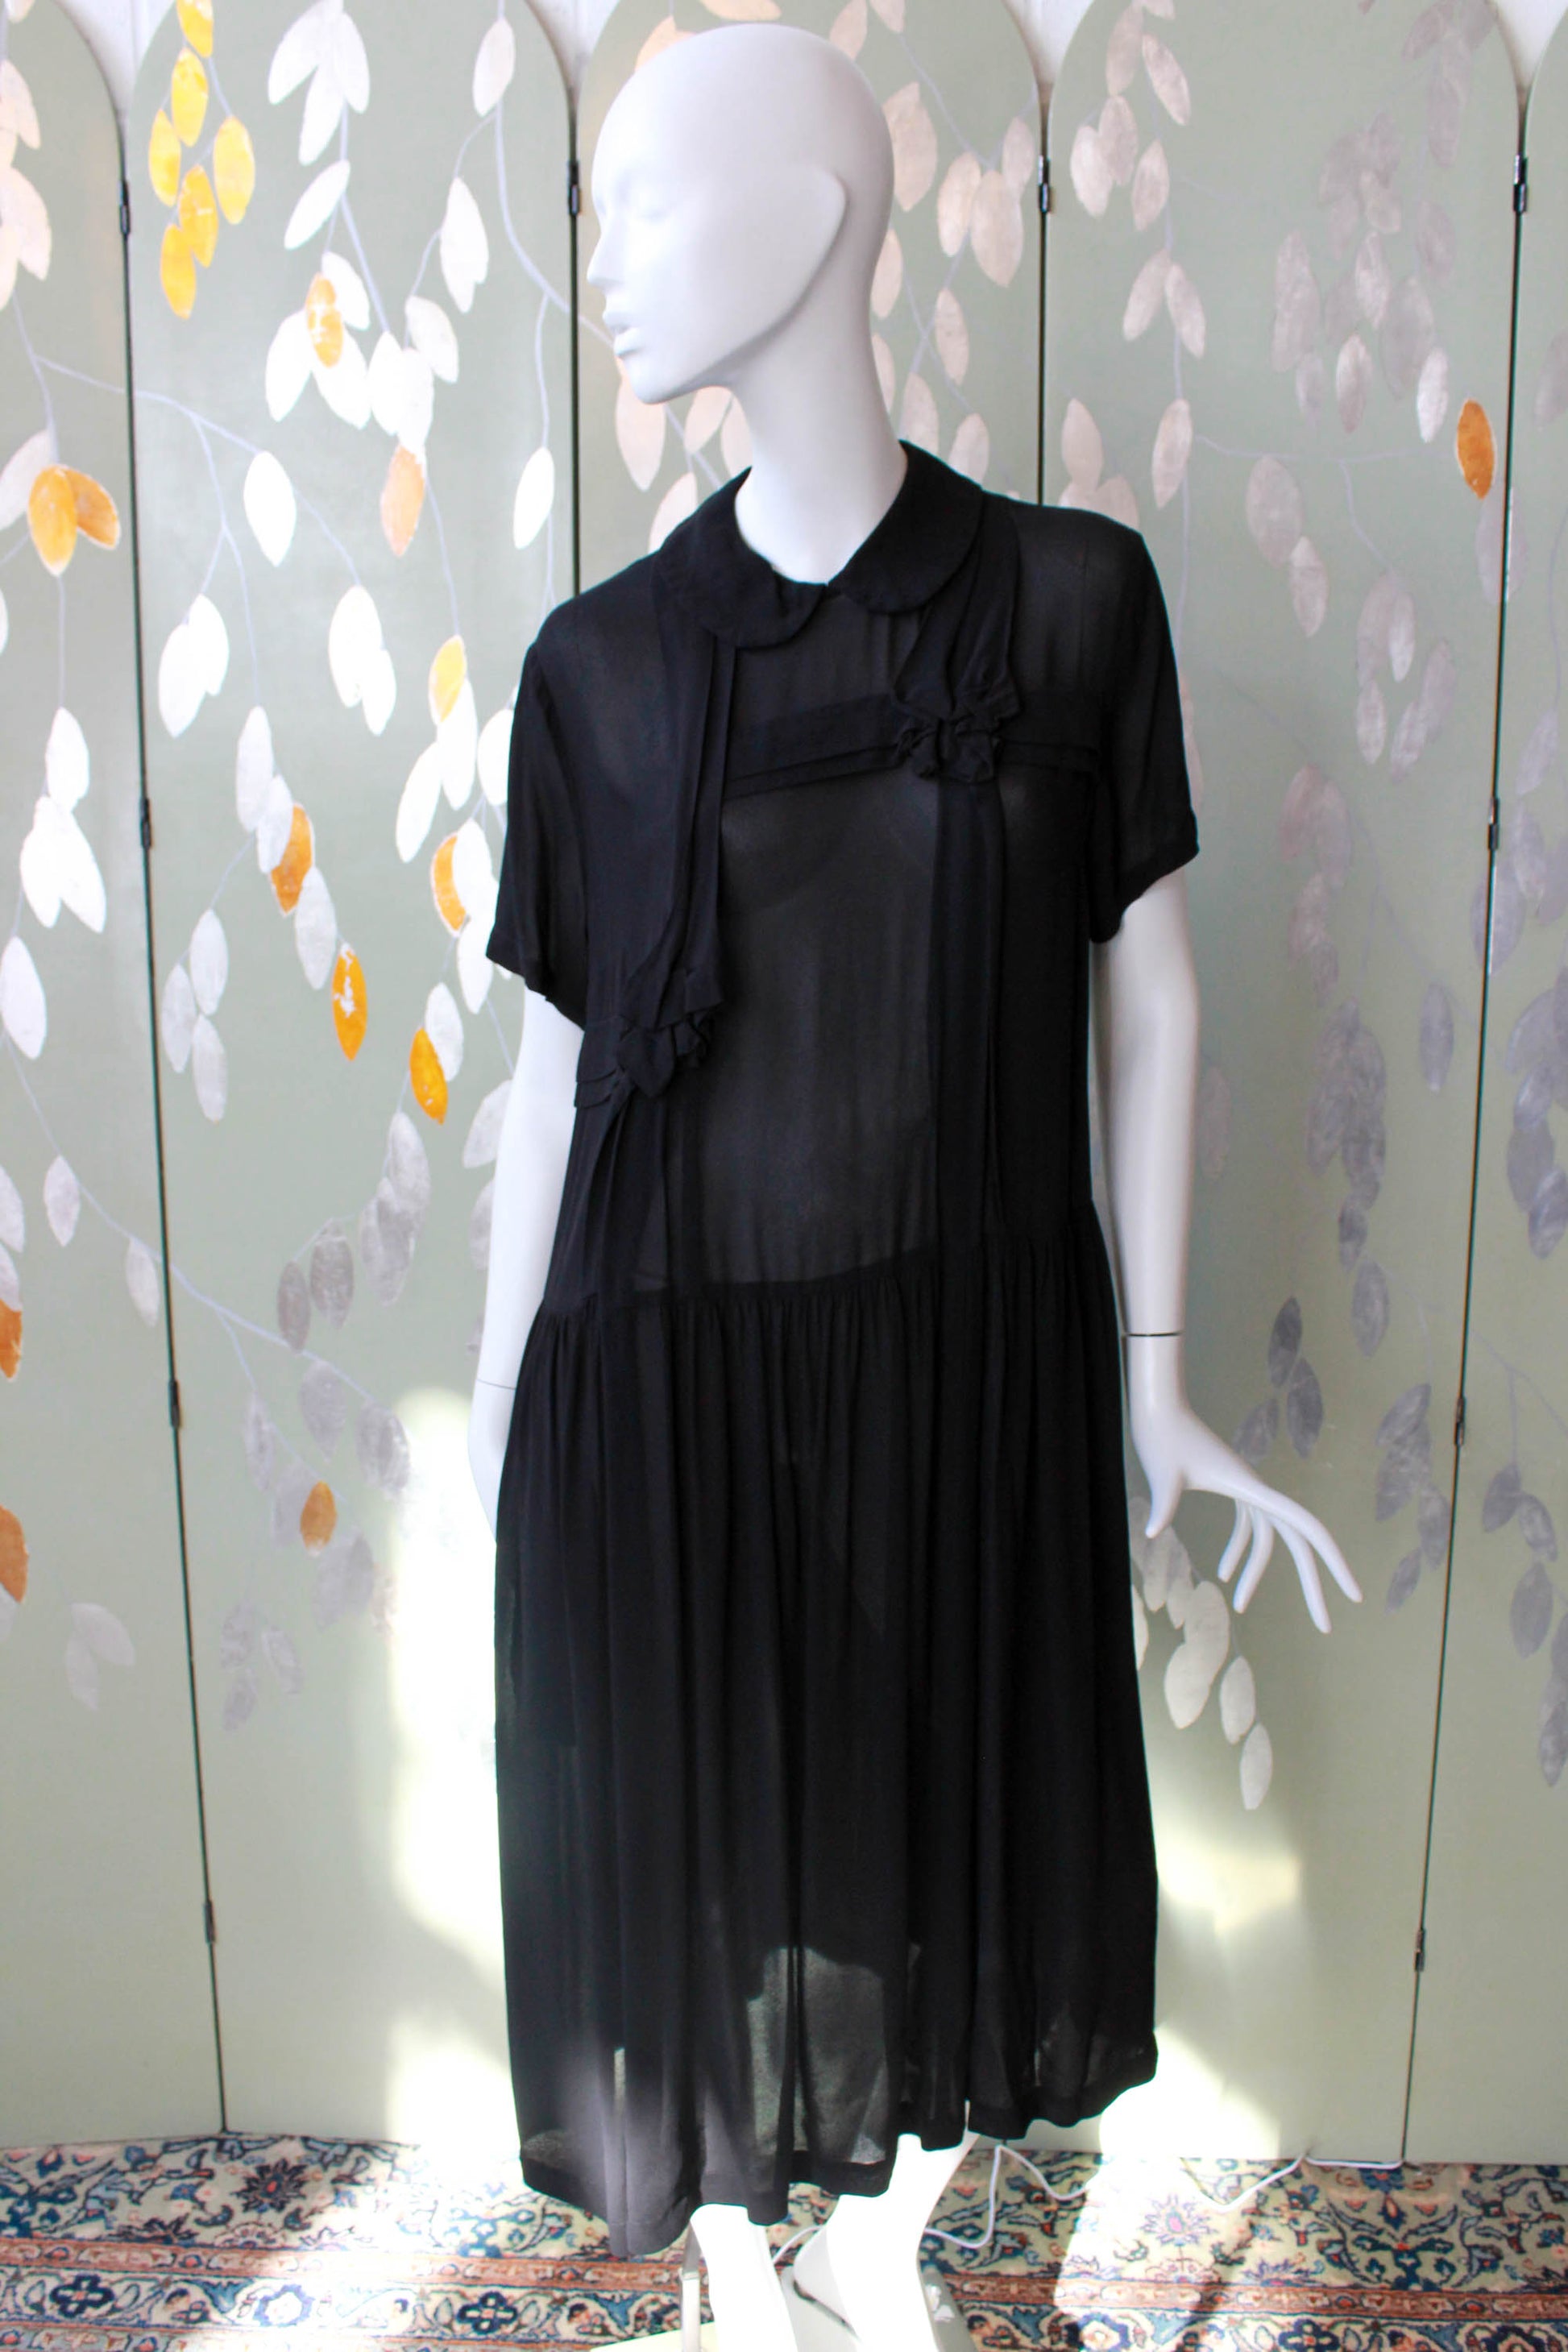  Black Sheer Dress